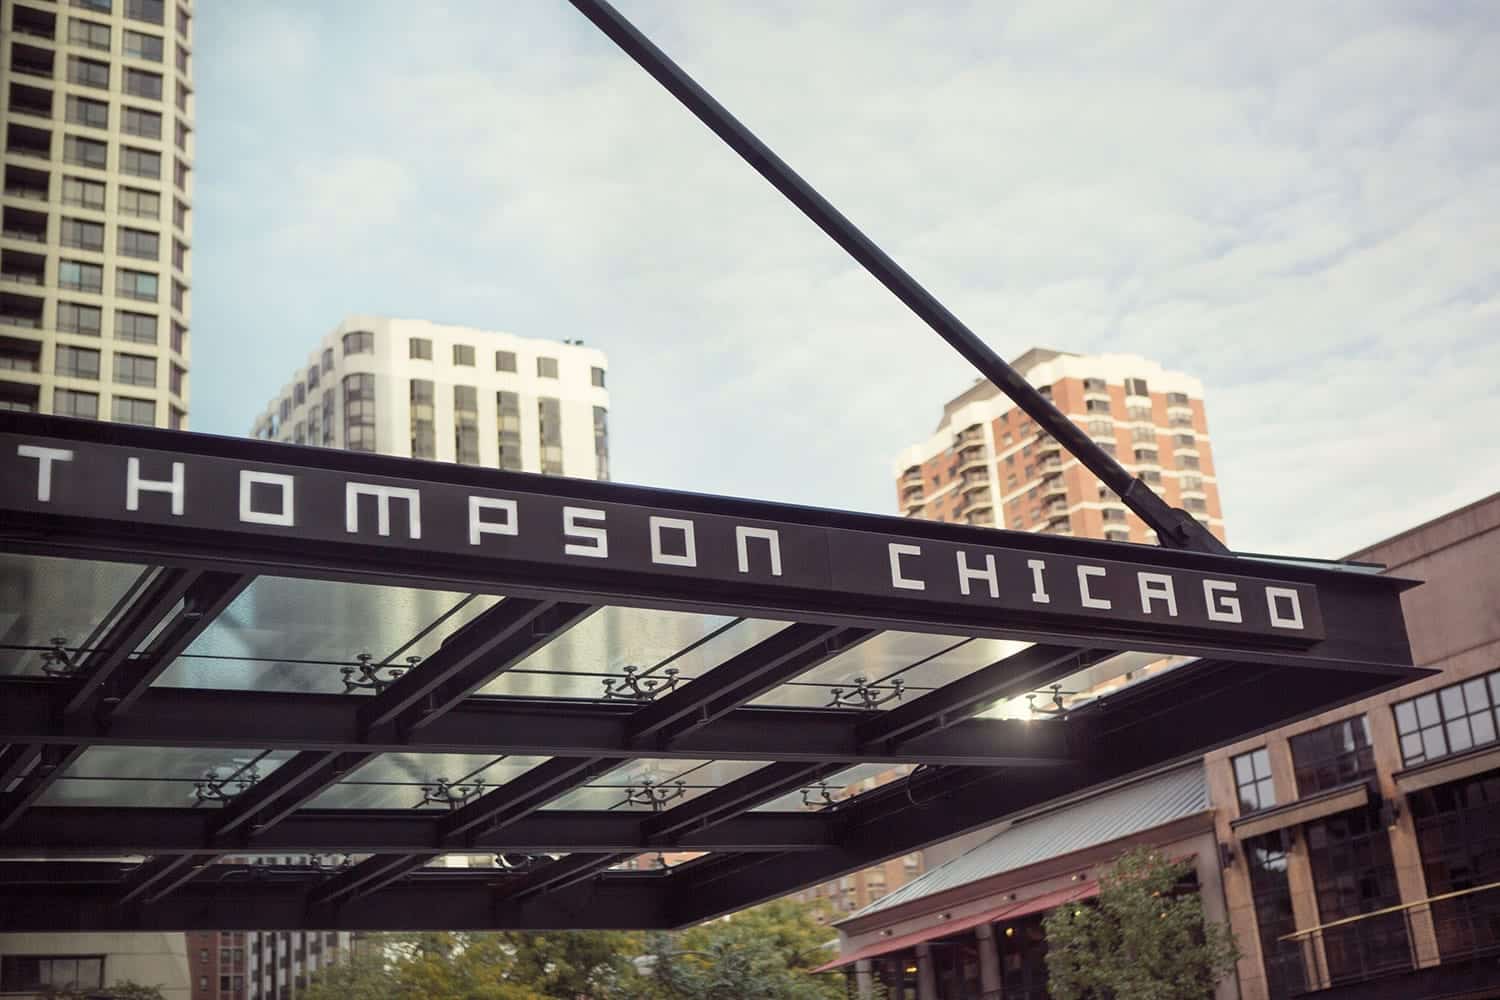 Thompson Chicago